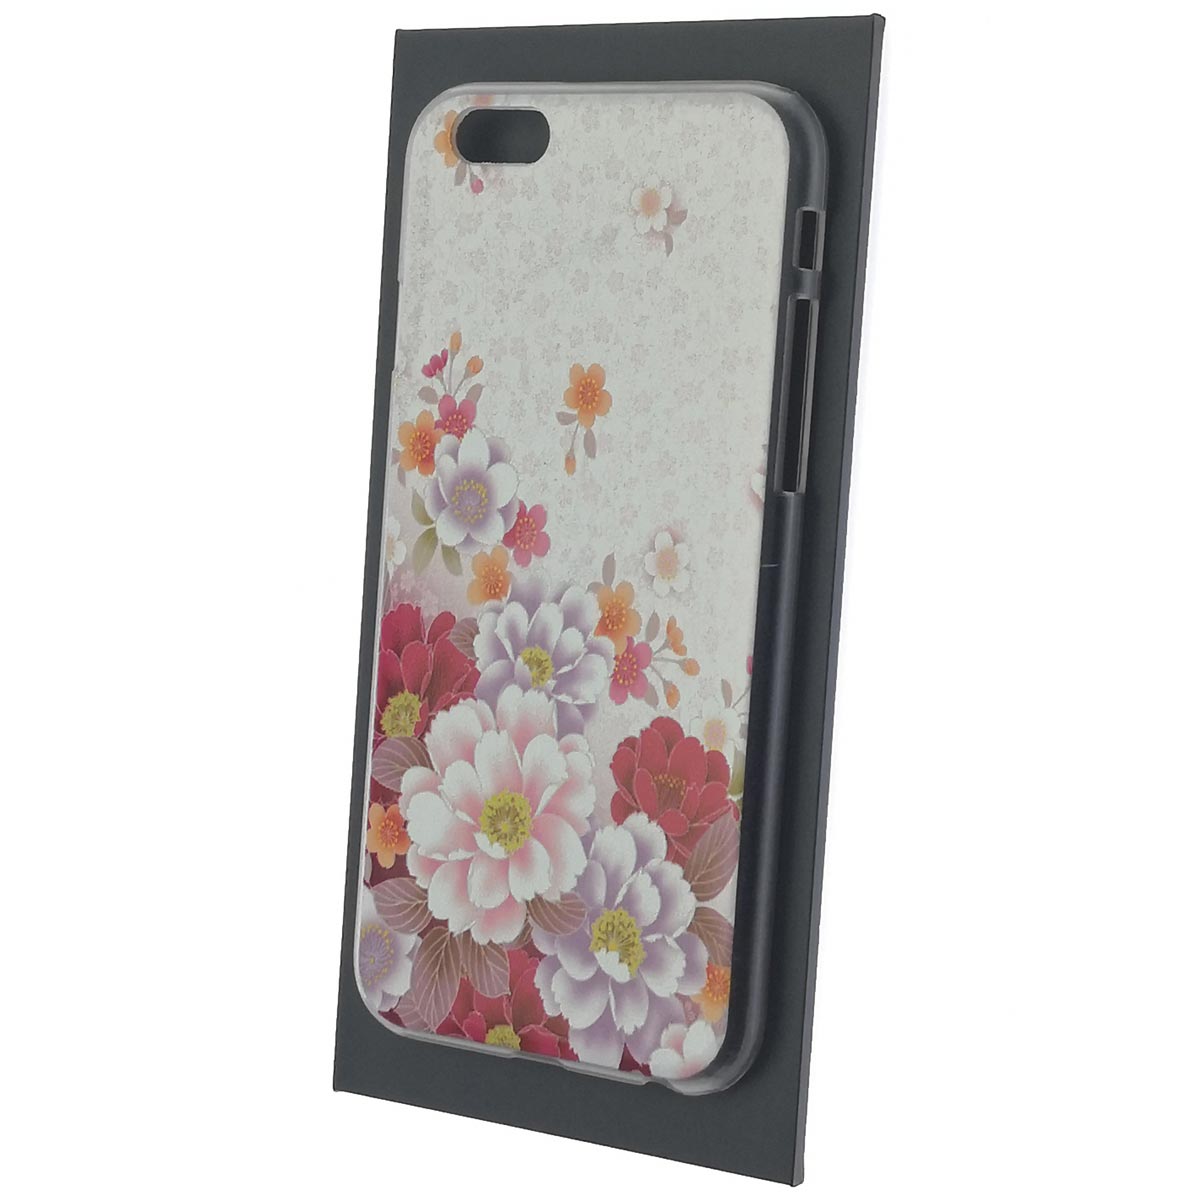 Чехол накладка для APPLE iPhone 6, iPhone 6G, iPhone 6S, пластик, рисунок цветочки